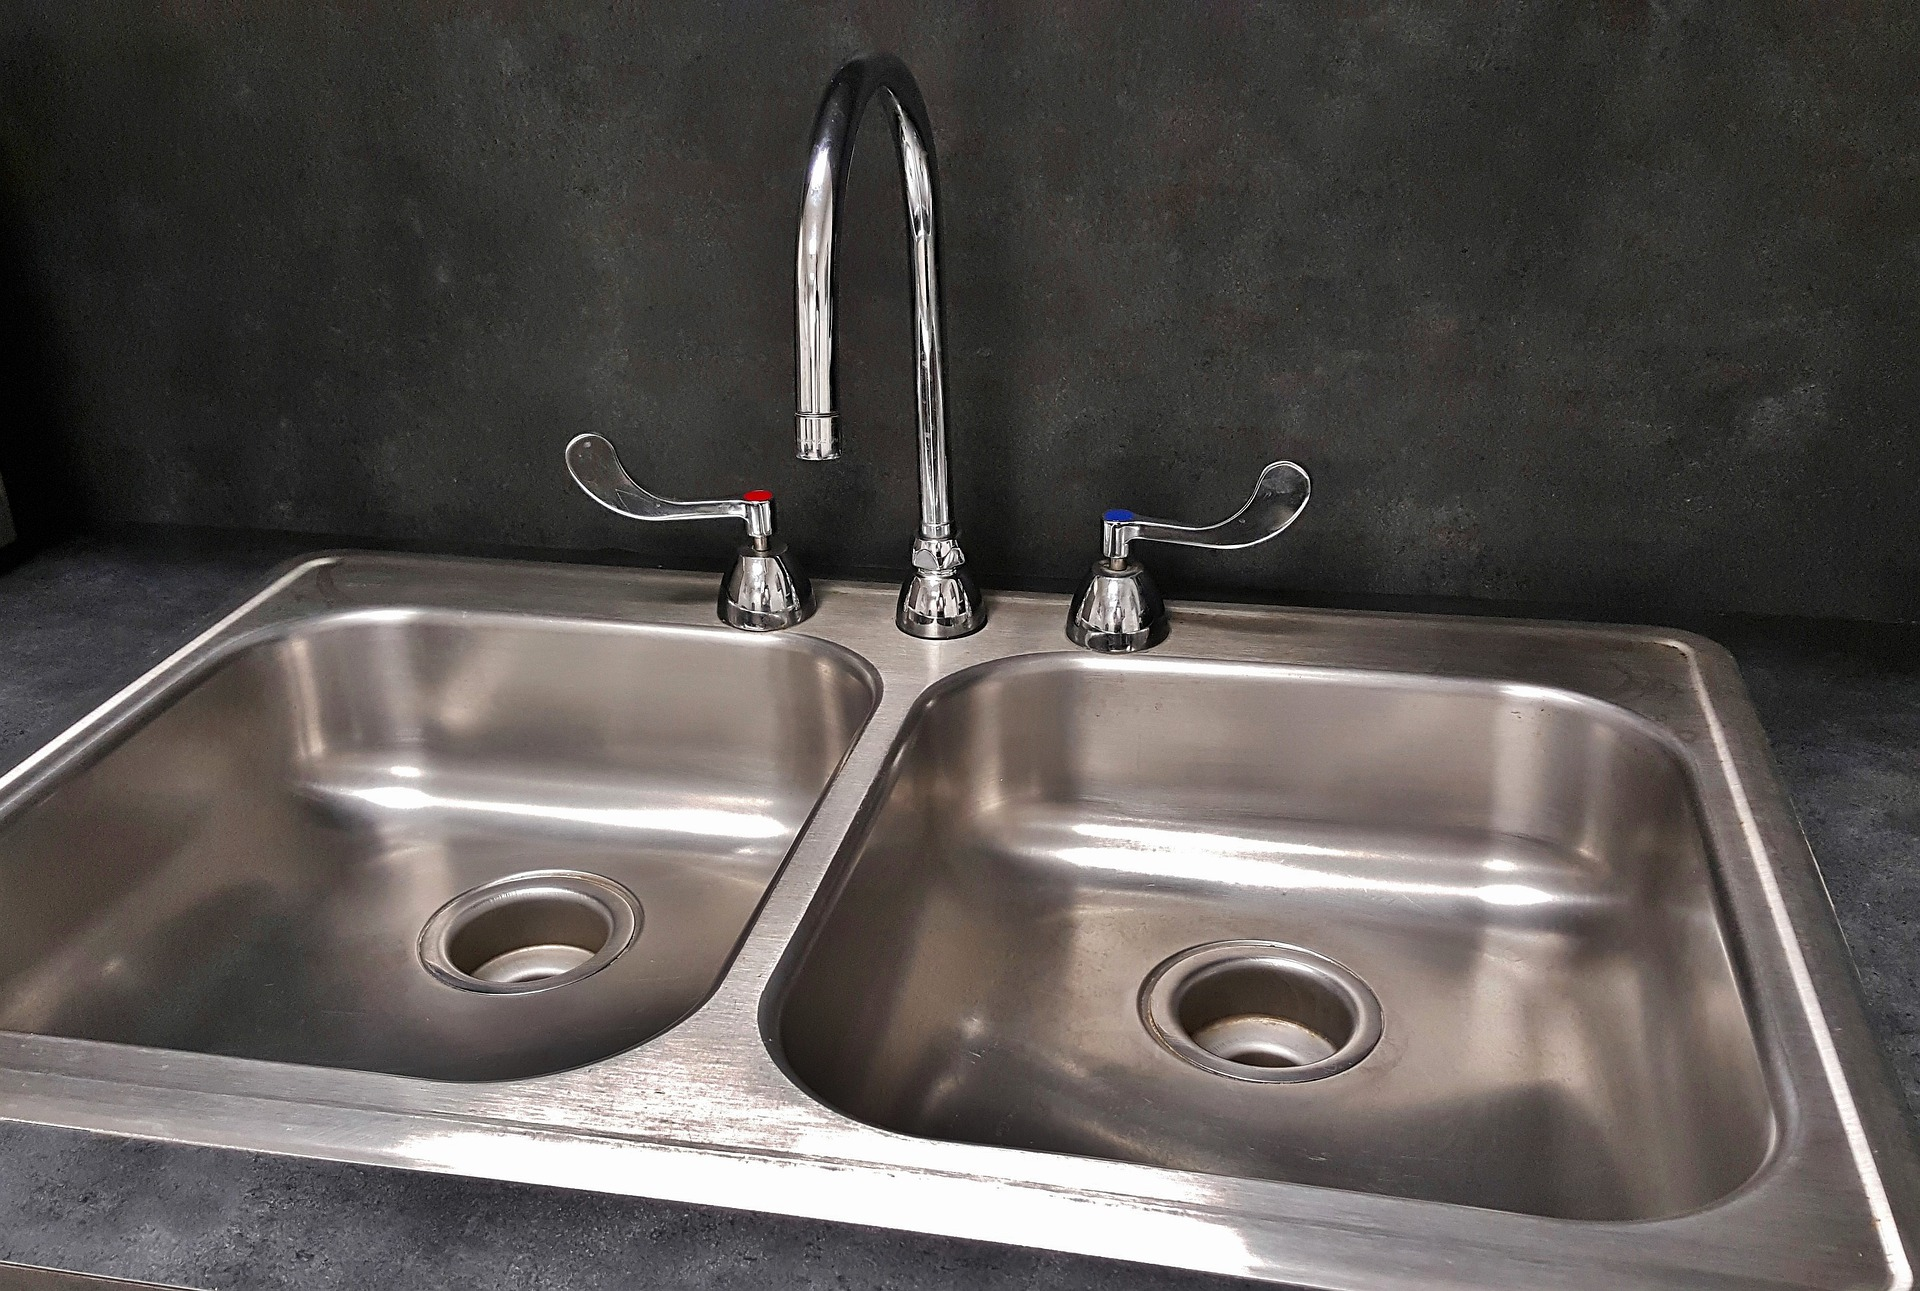 newly installed kitchen tap